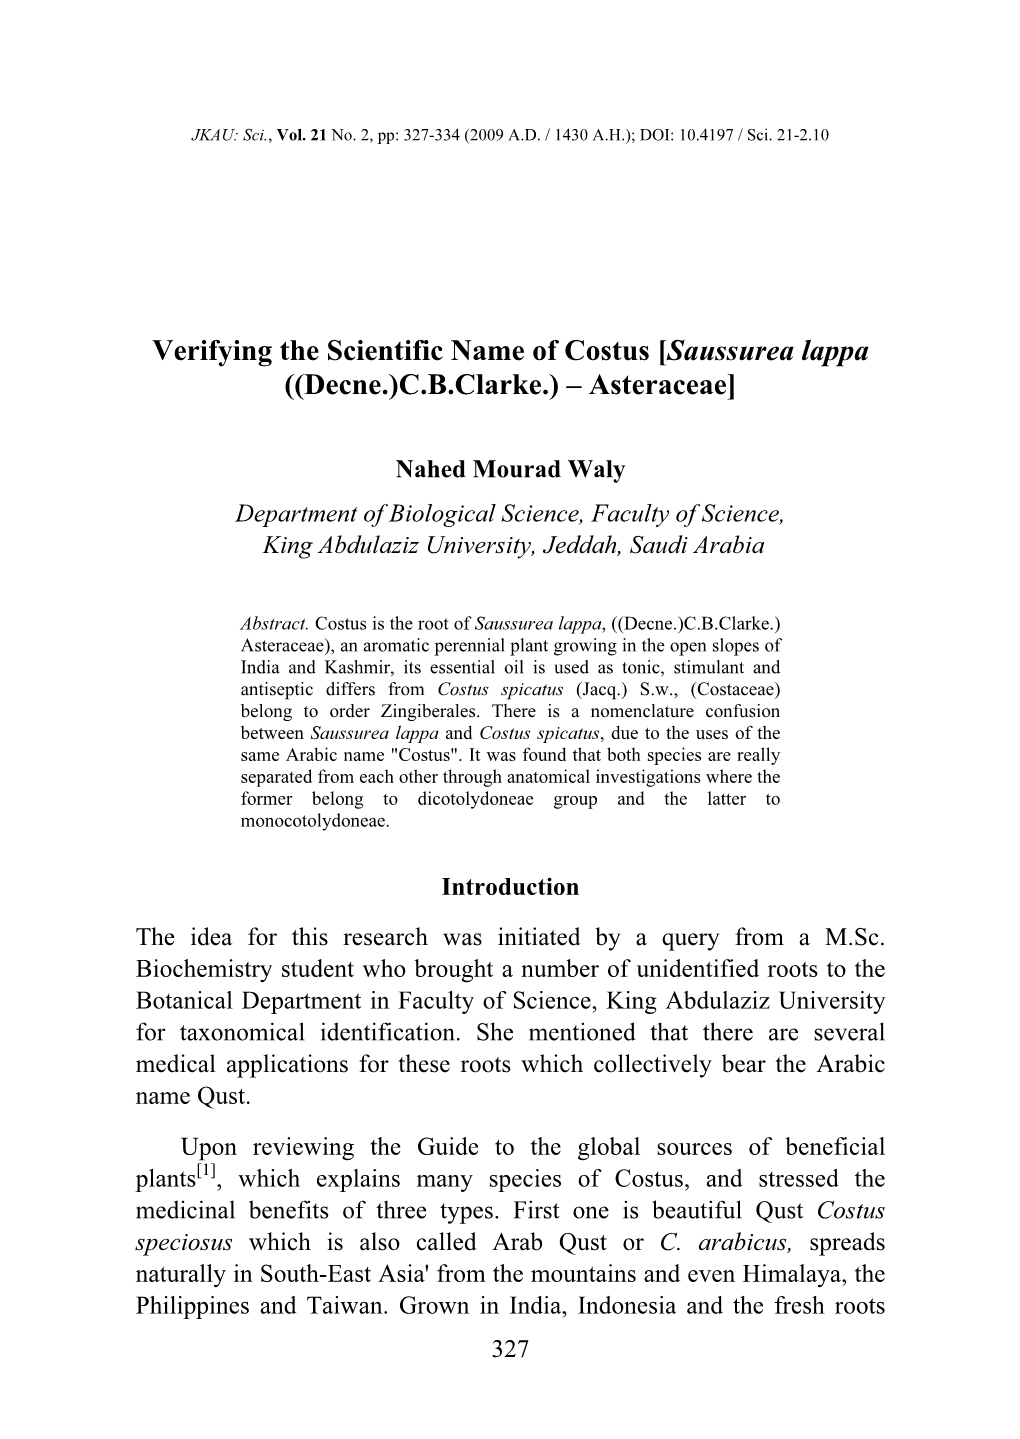 Verifying the Scientific Name of Costus [Saussurea Lappa ((Decne.)C.B.Clarke.) – Asteraceae]